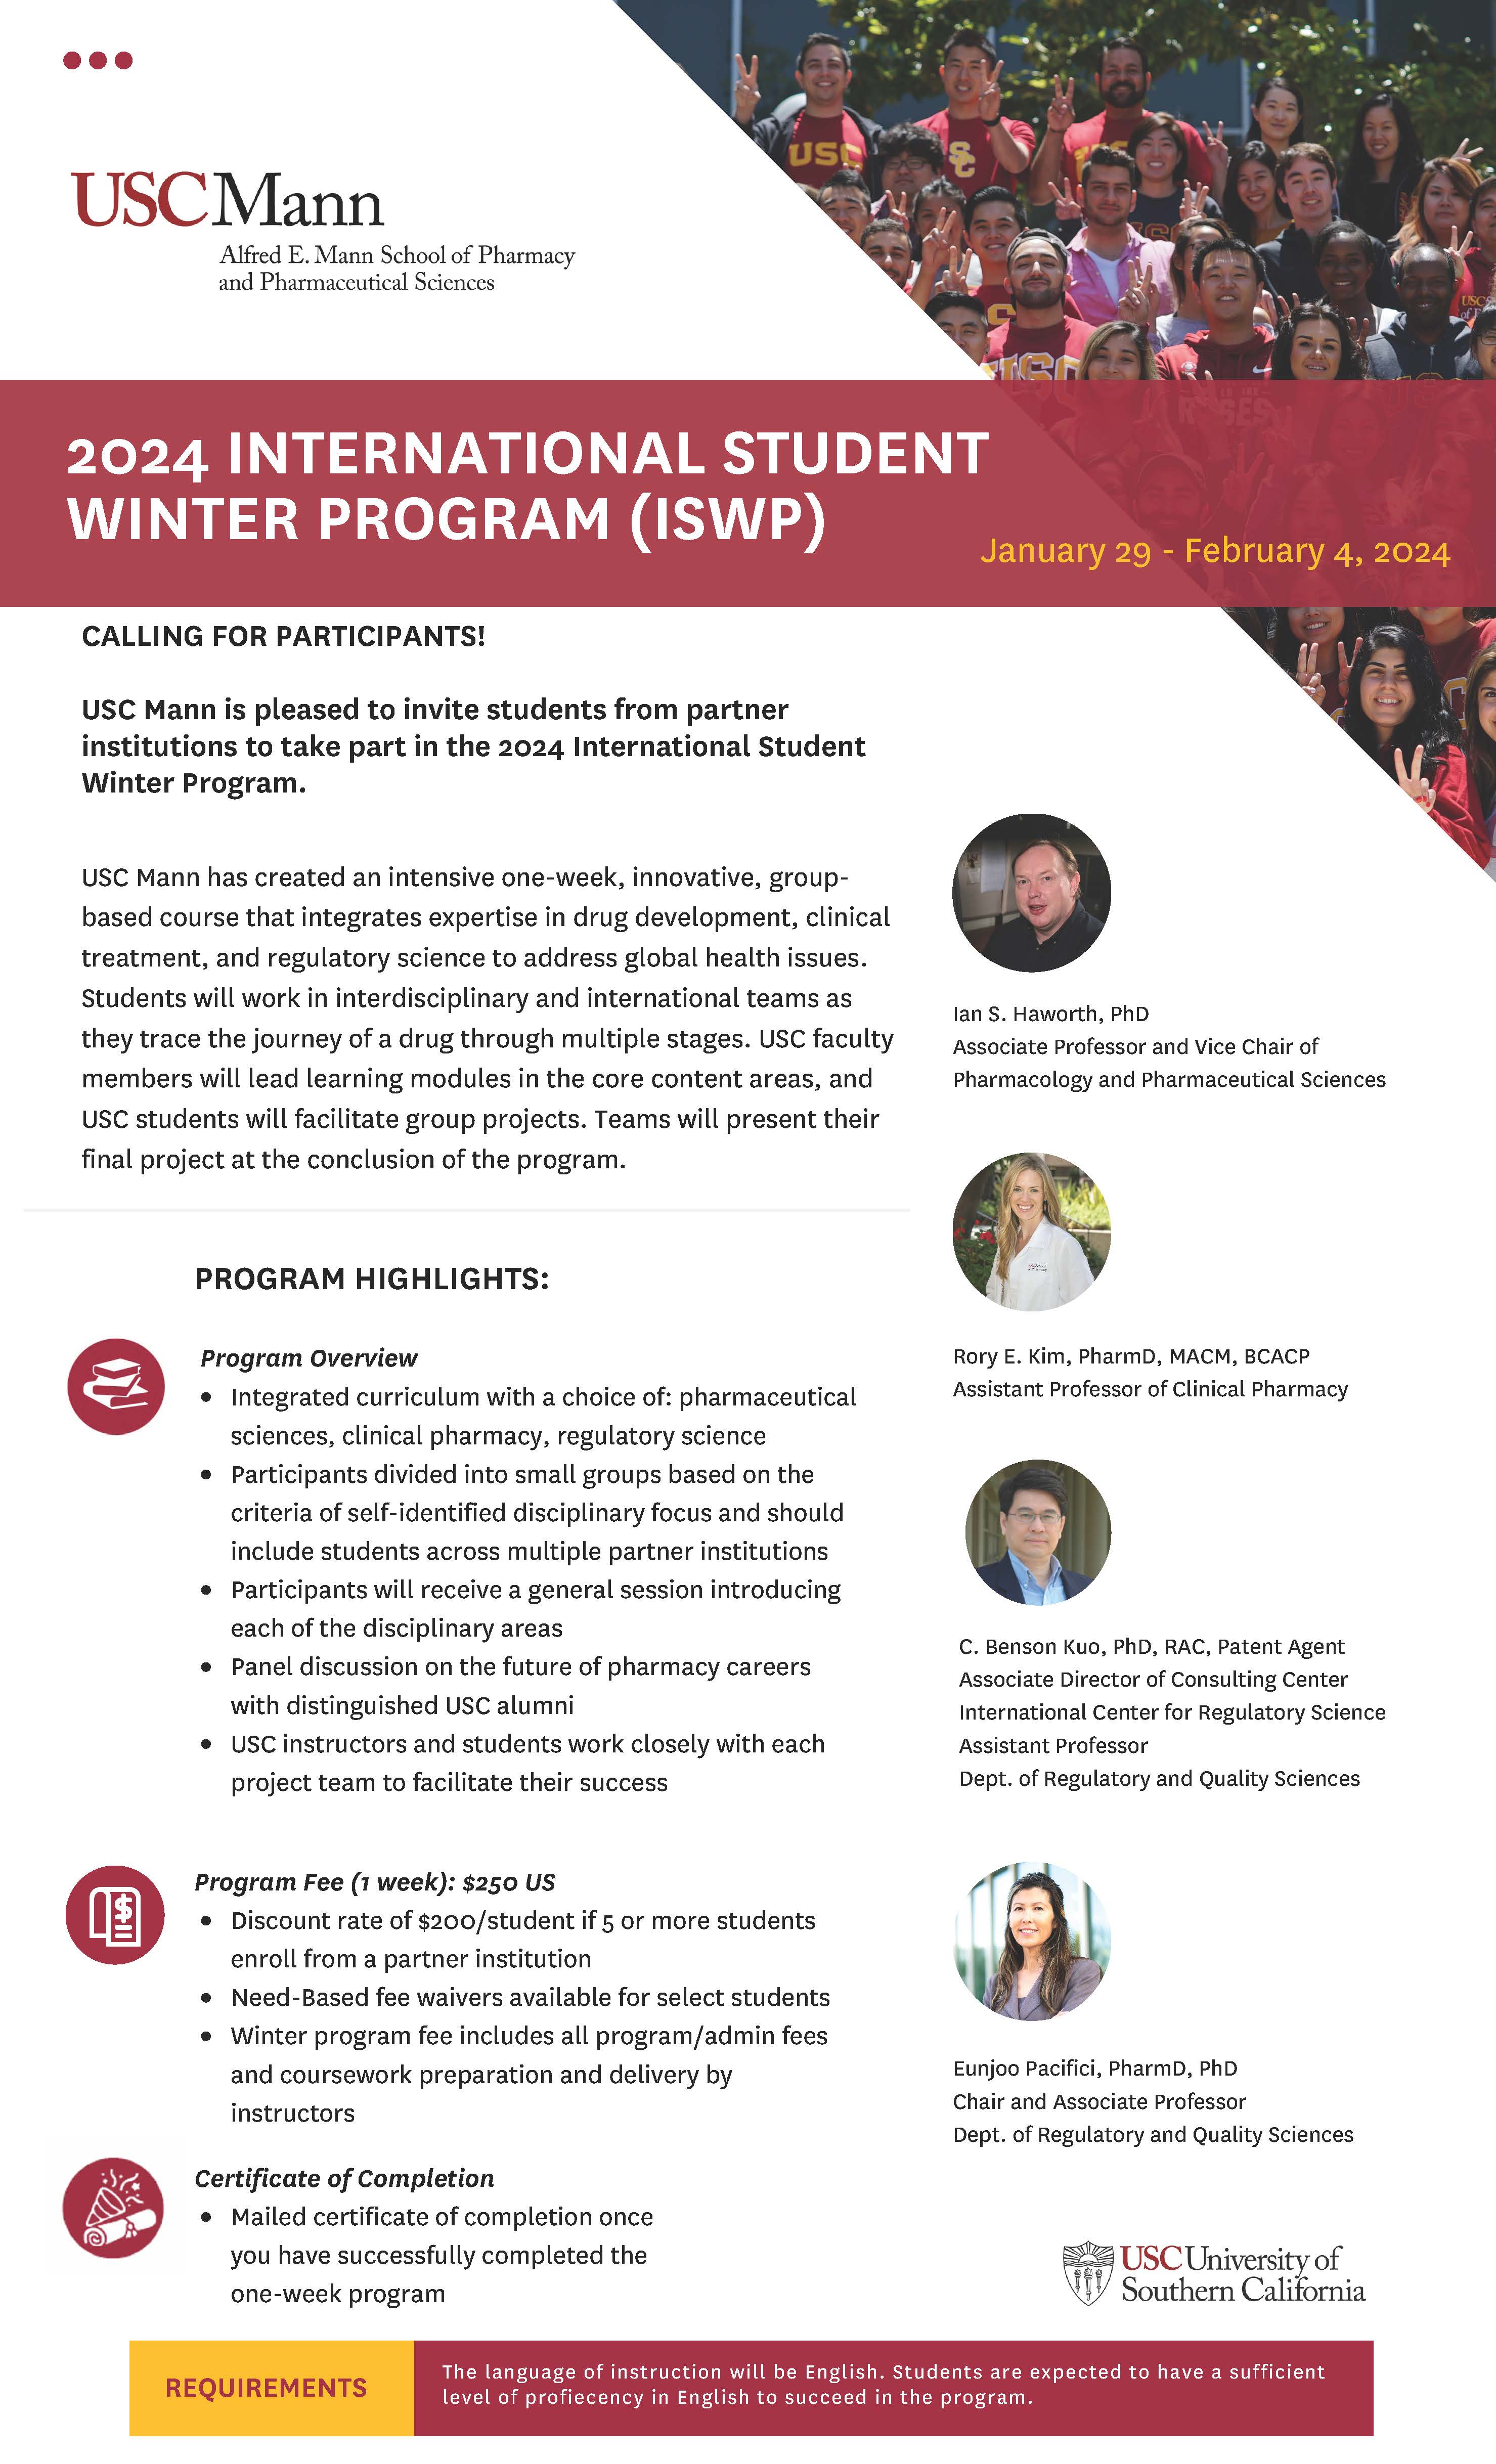 International Student Winter Program 2024 flyer FINAL